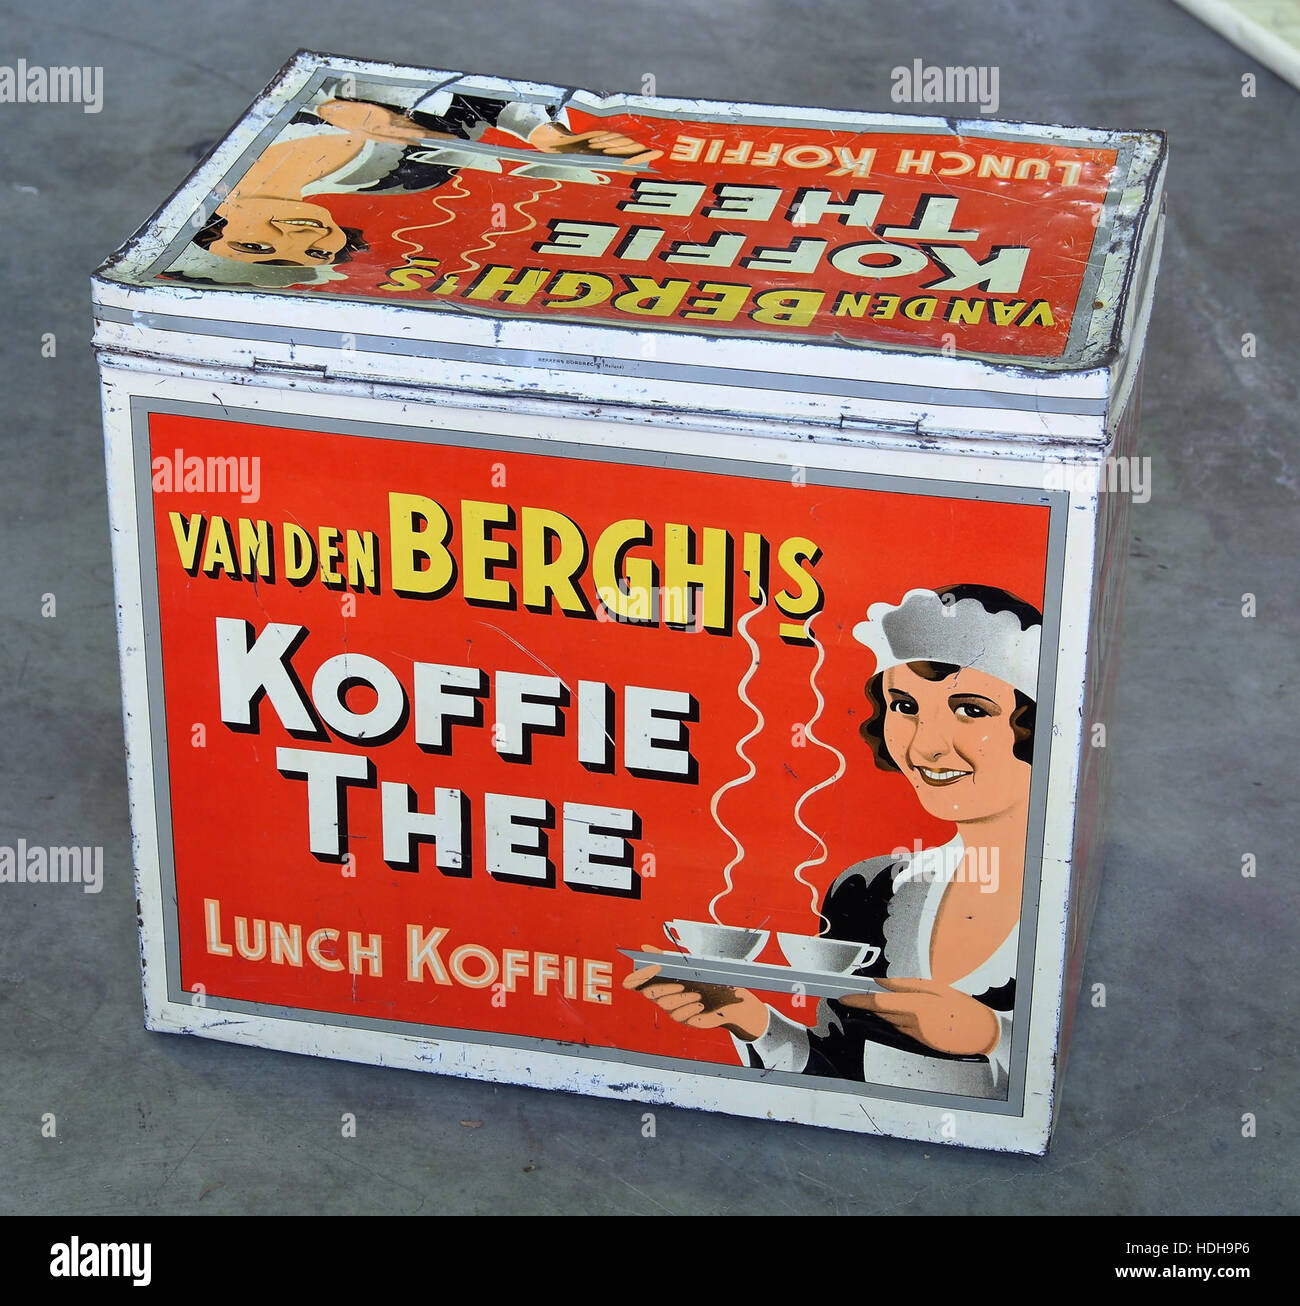 Van den Berghs Koffie & Thee blik pic3 Stock Photo